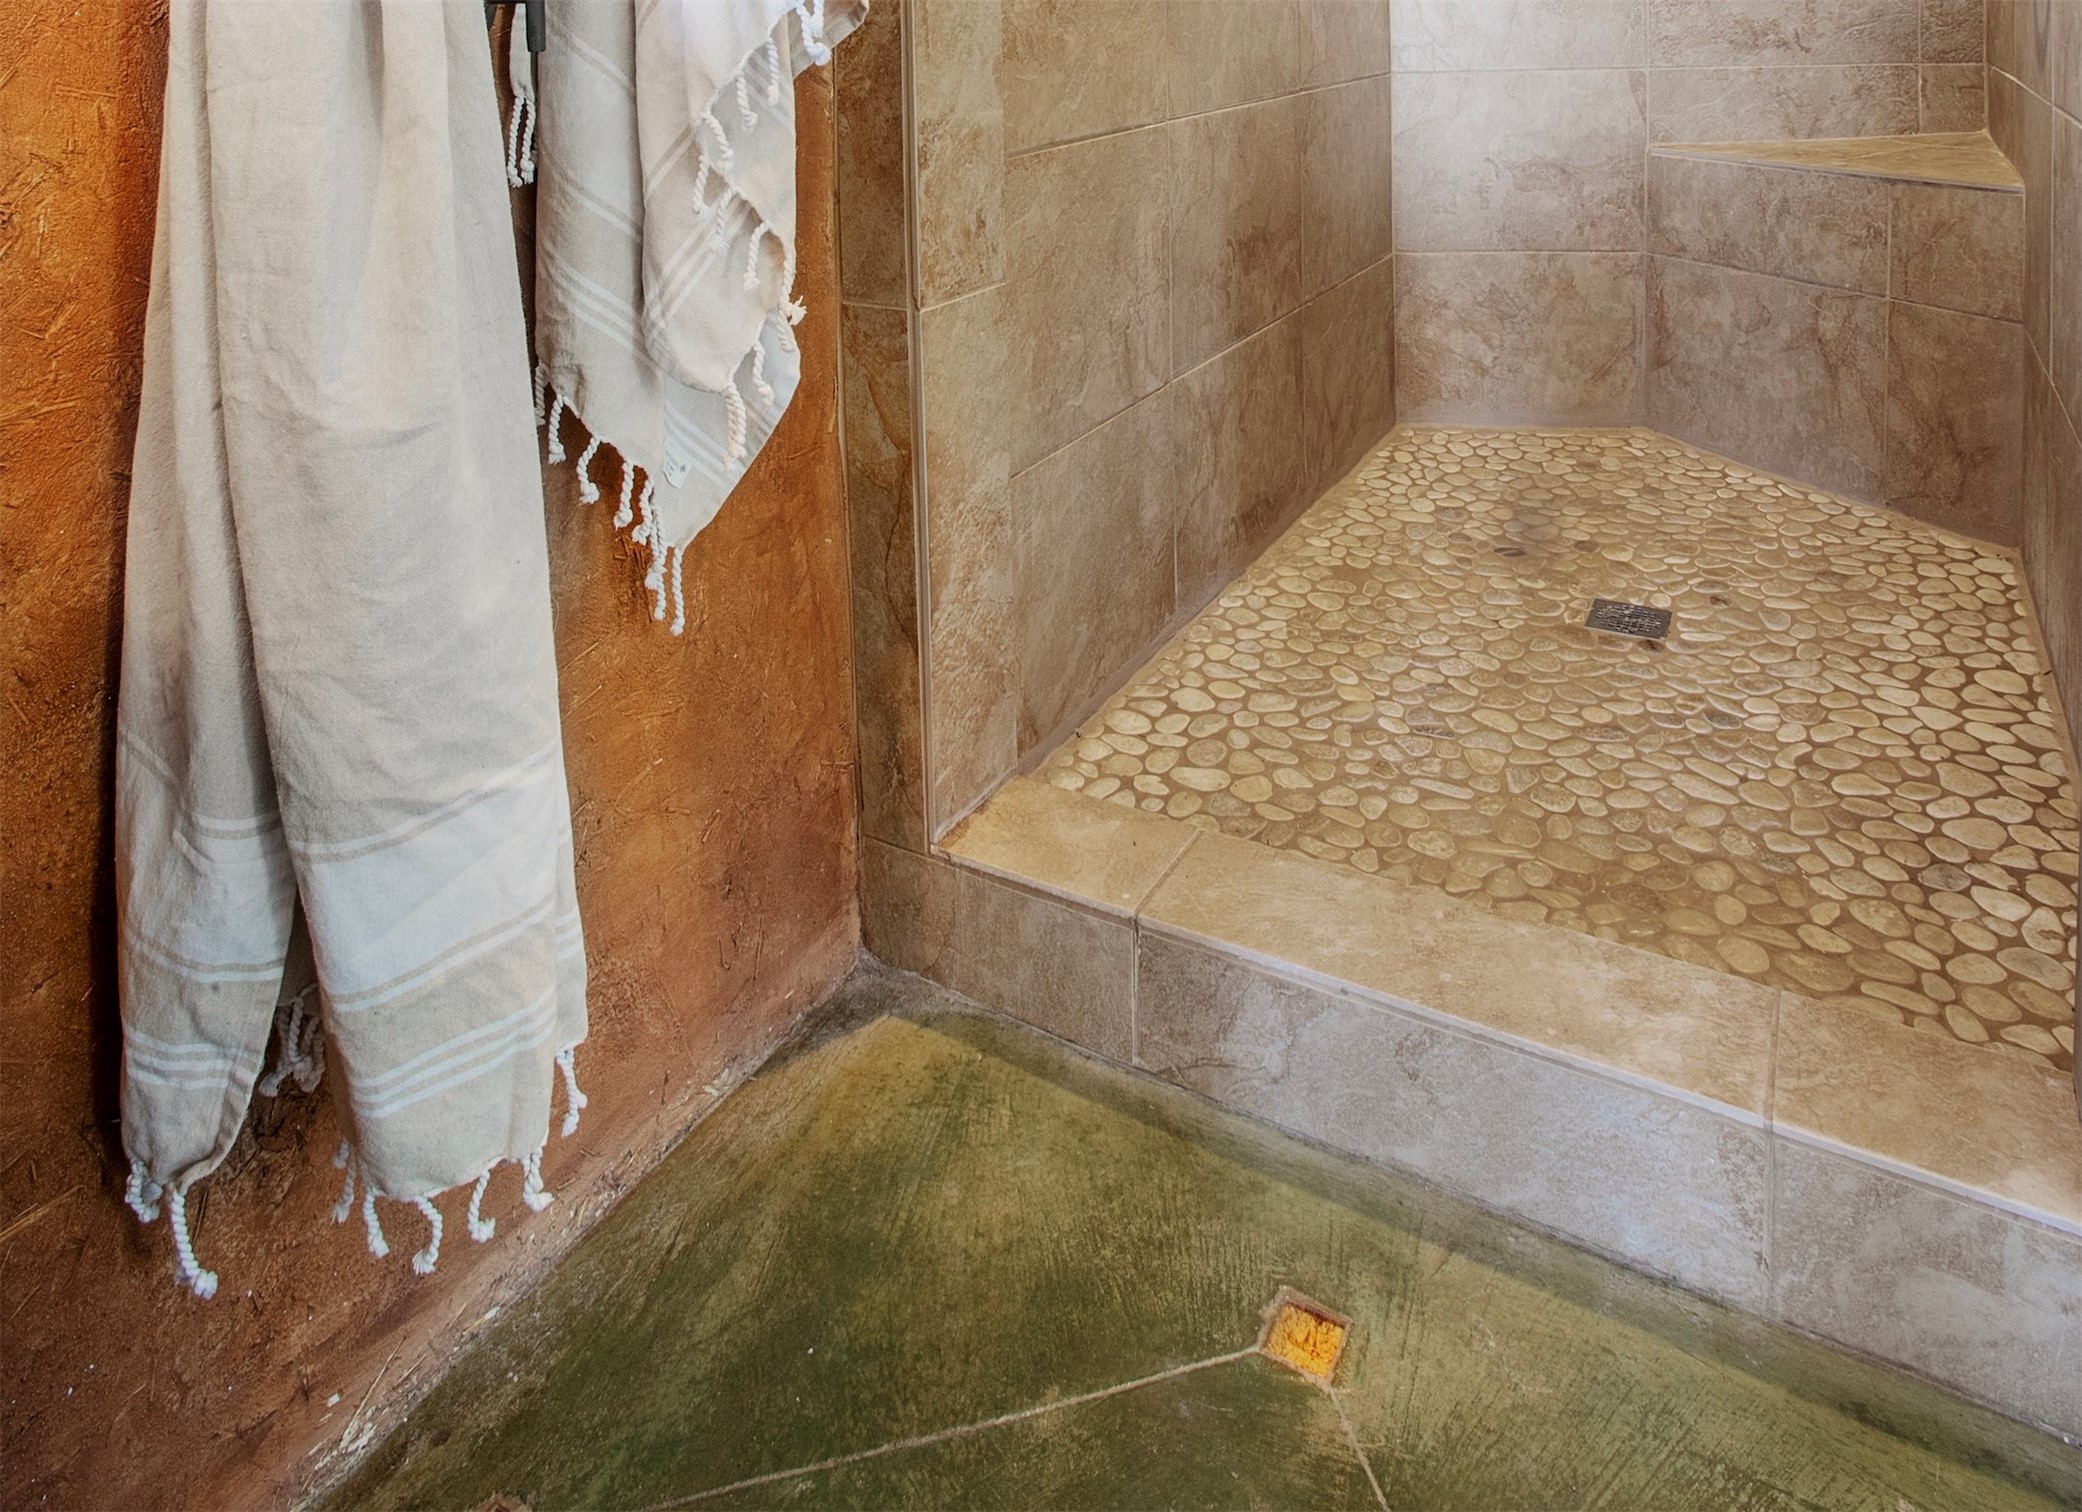 Master bathroom shower tile and floor stain detail.